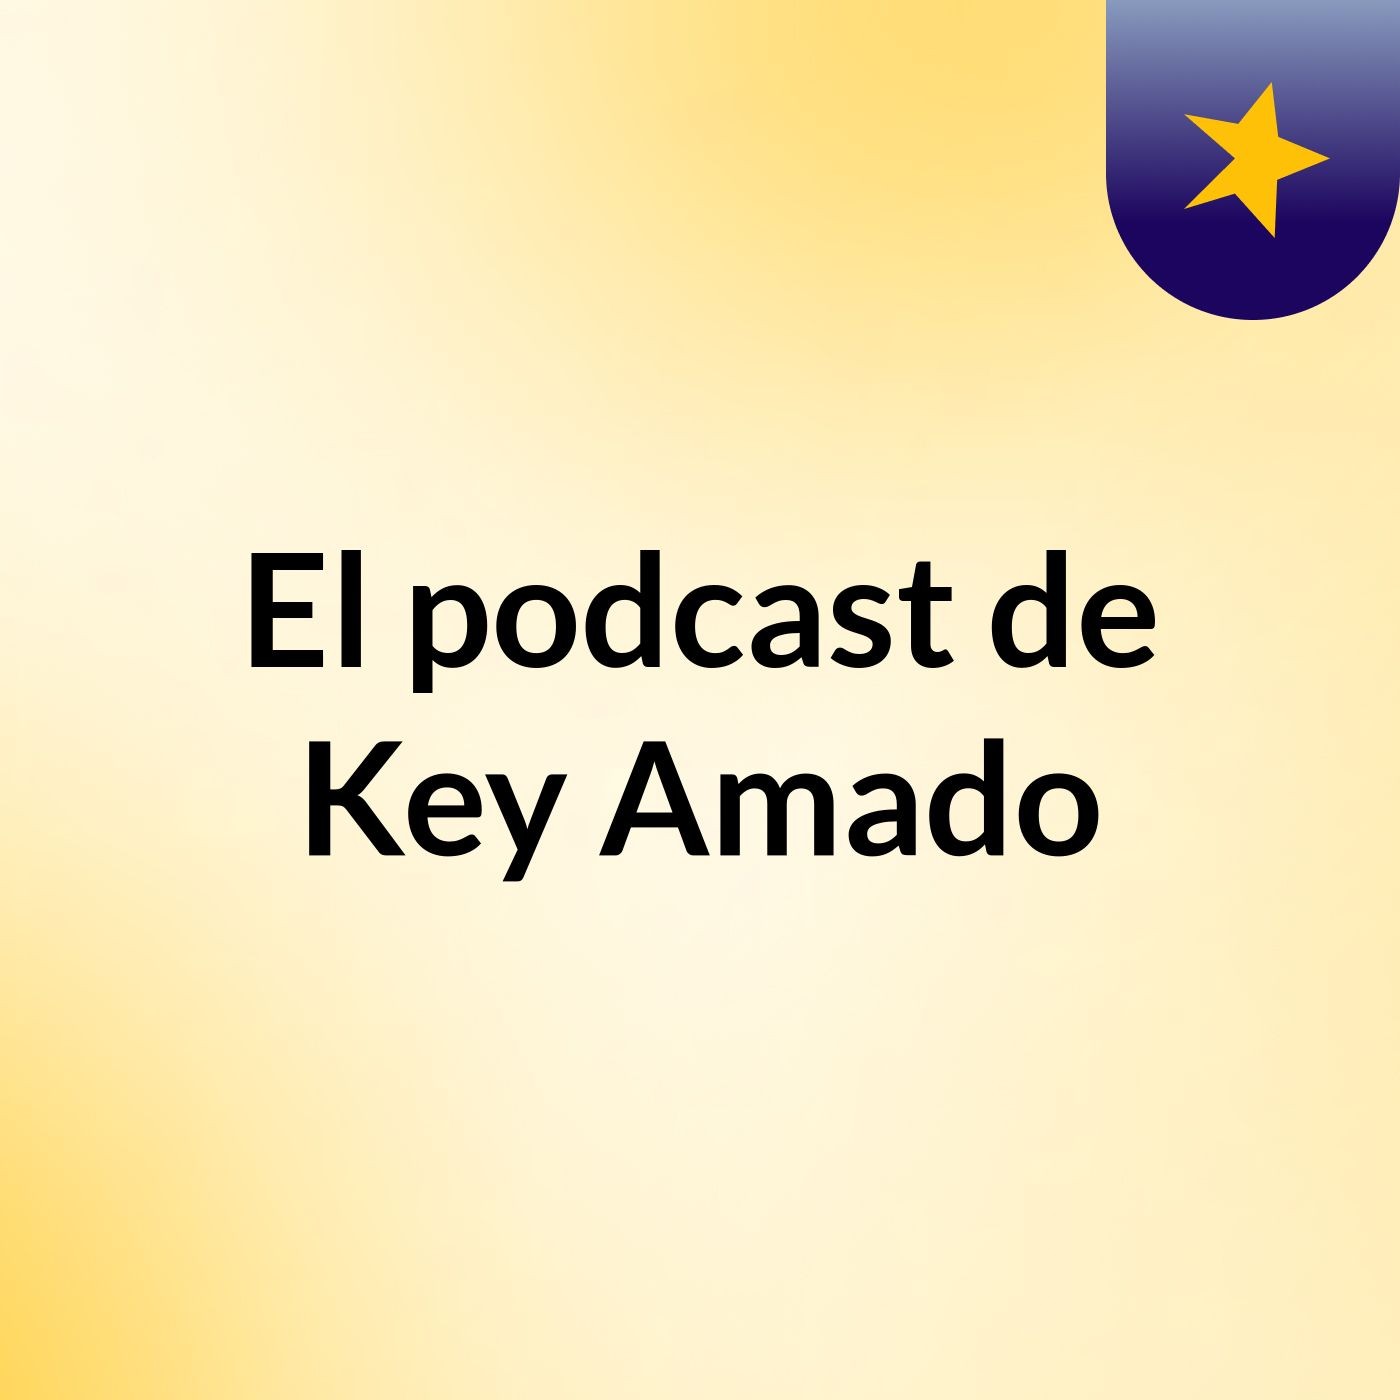 El podcast de Key Amado